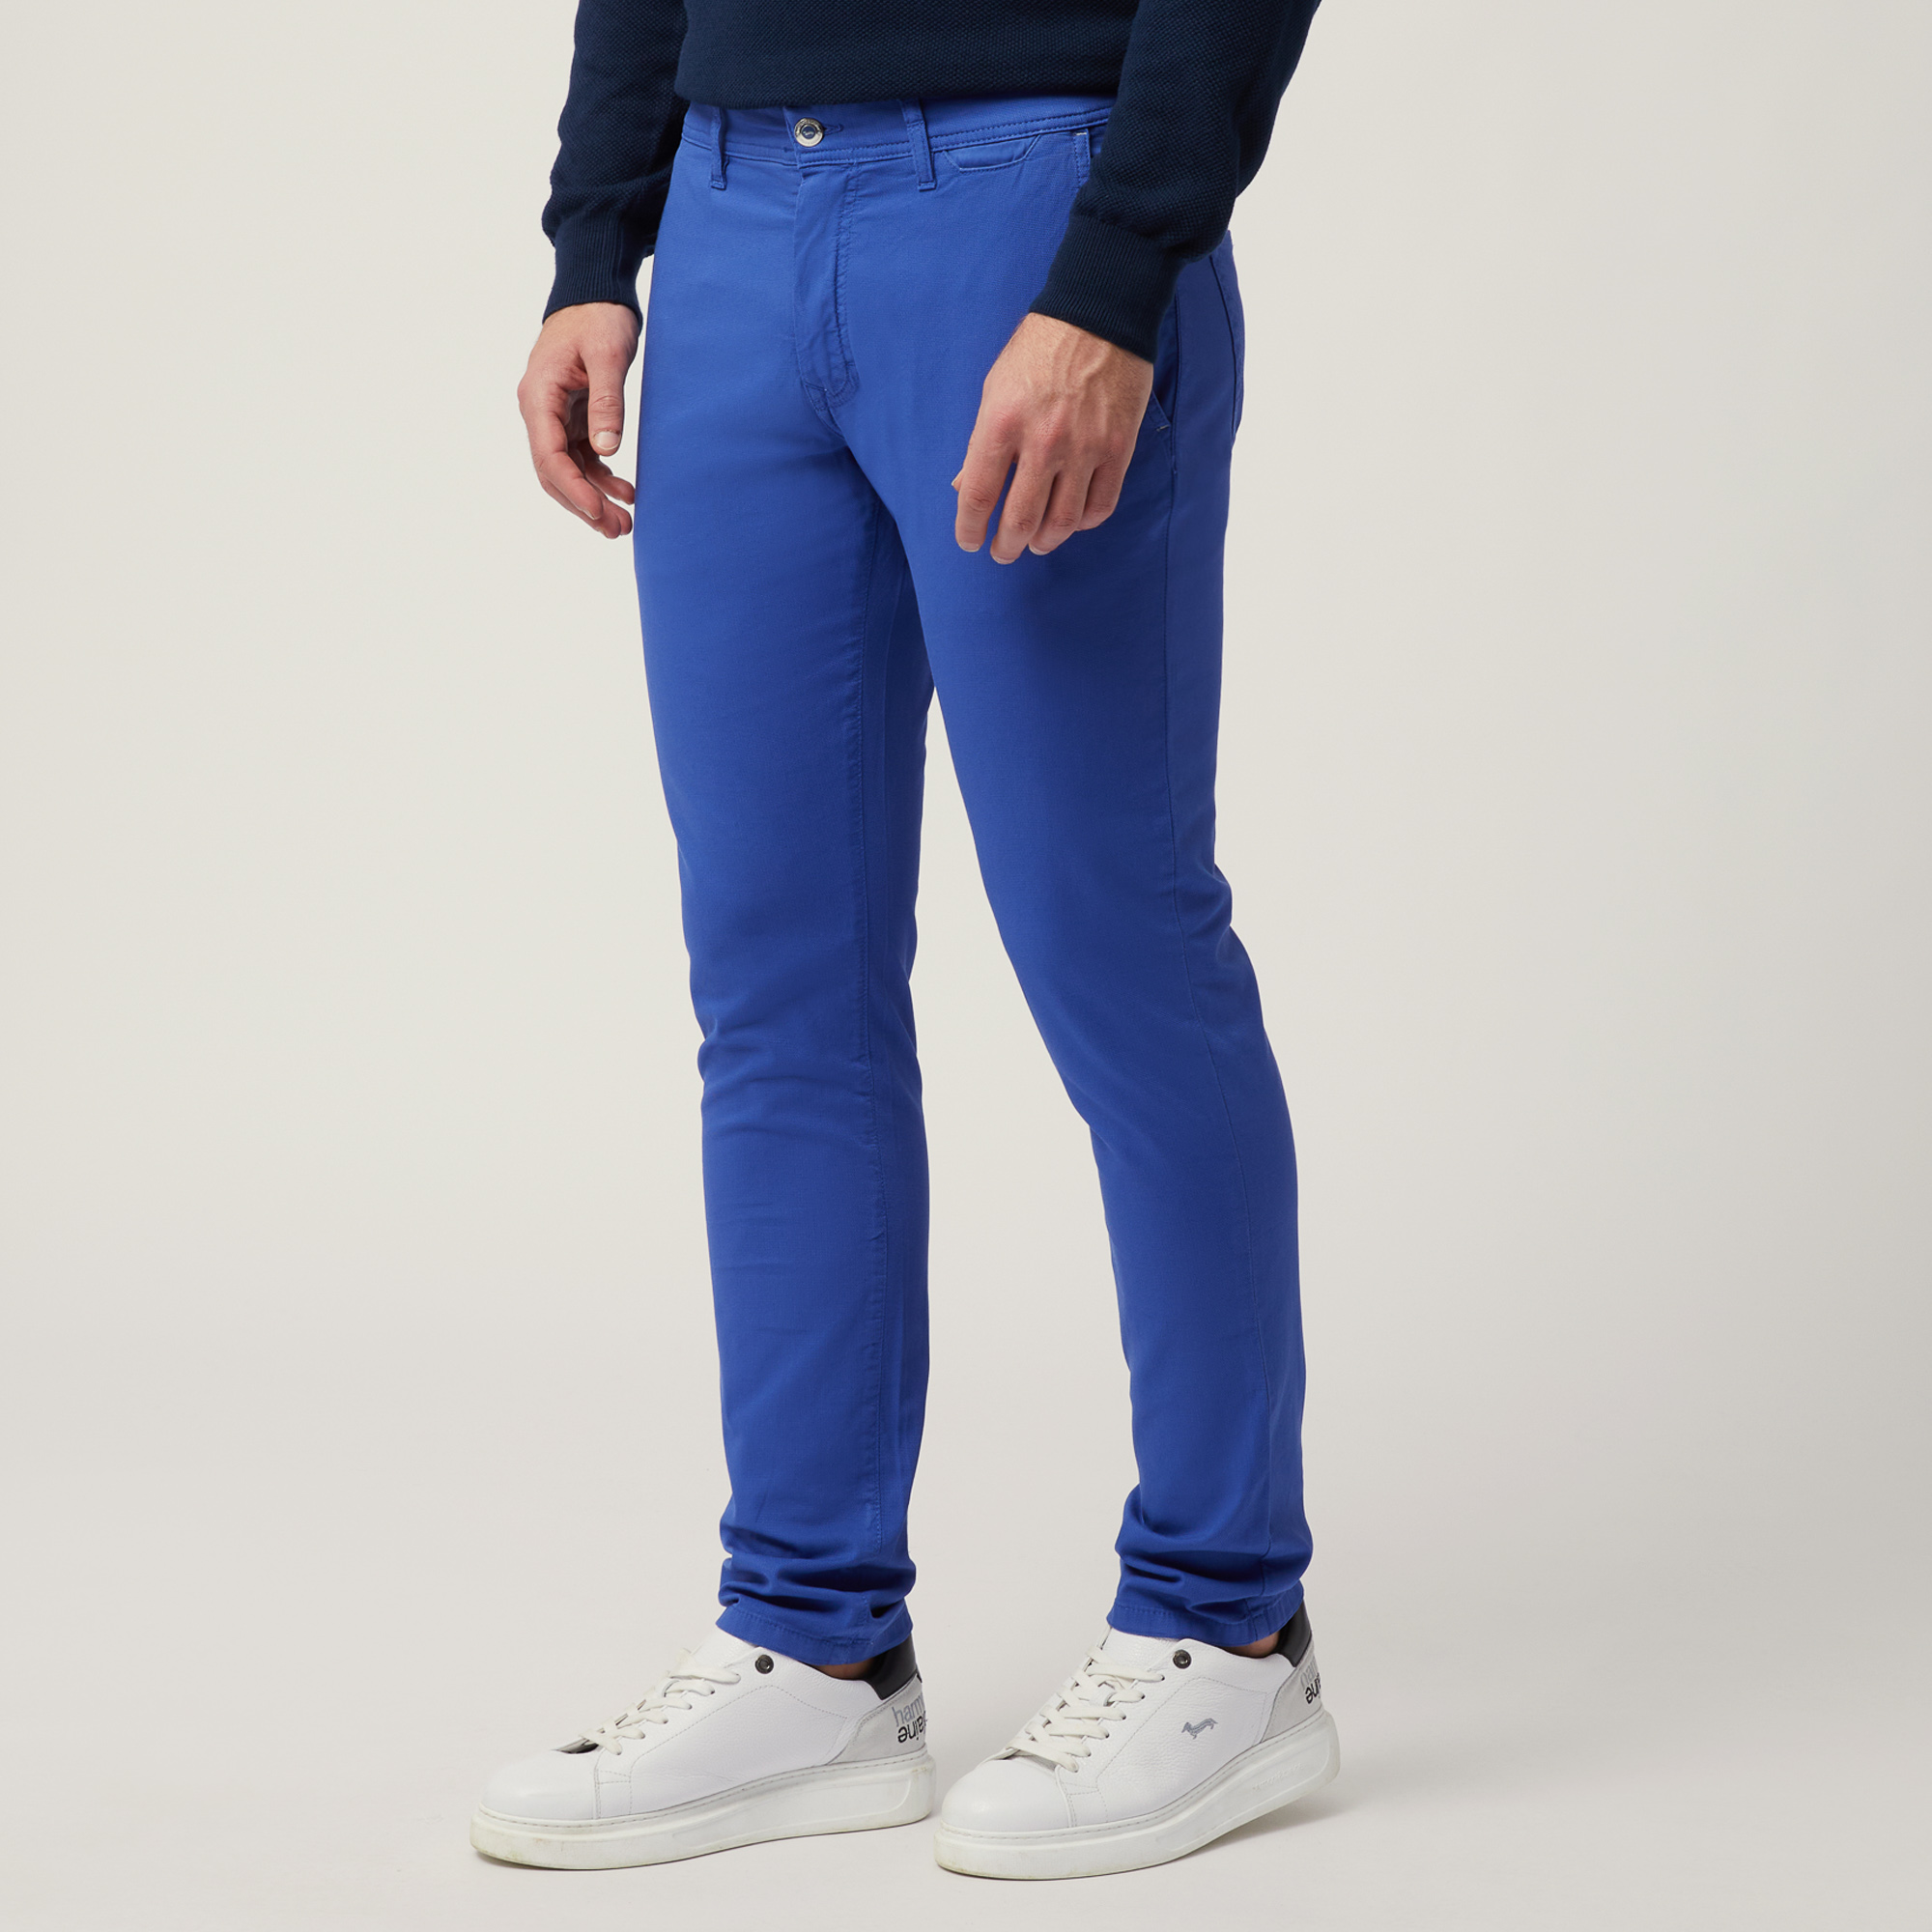 Colorfive Pants, Hydrangea, large